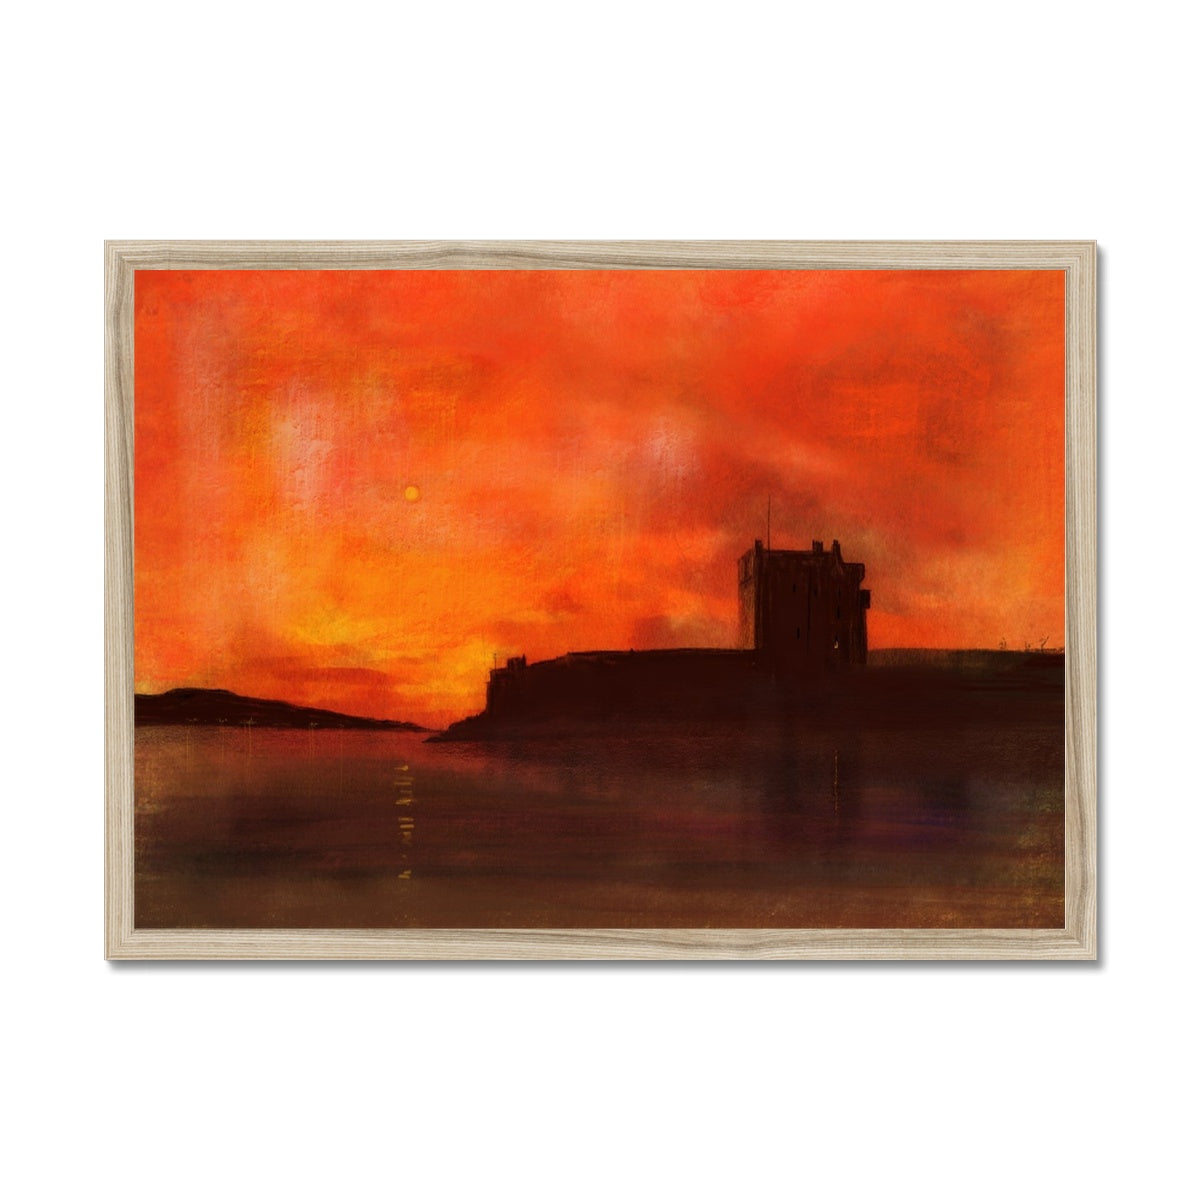 Broughty Castle Sunset Painting | Framed Prints From Scotland-Framed Prints-Historic & Iconic Scotland Art Gallery-A2 Landscape-Natural Frame-Paintings, Prints, Homeware, Art Gifts From Scotland By Scottish Artist Kevin Hunter